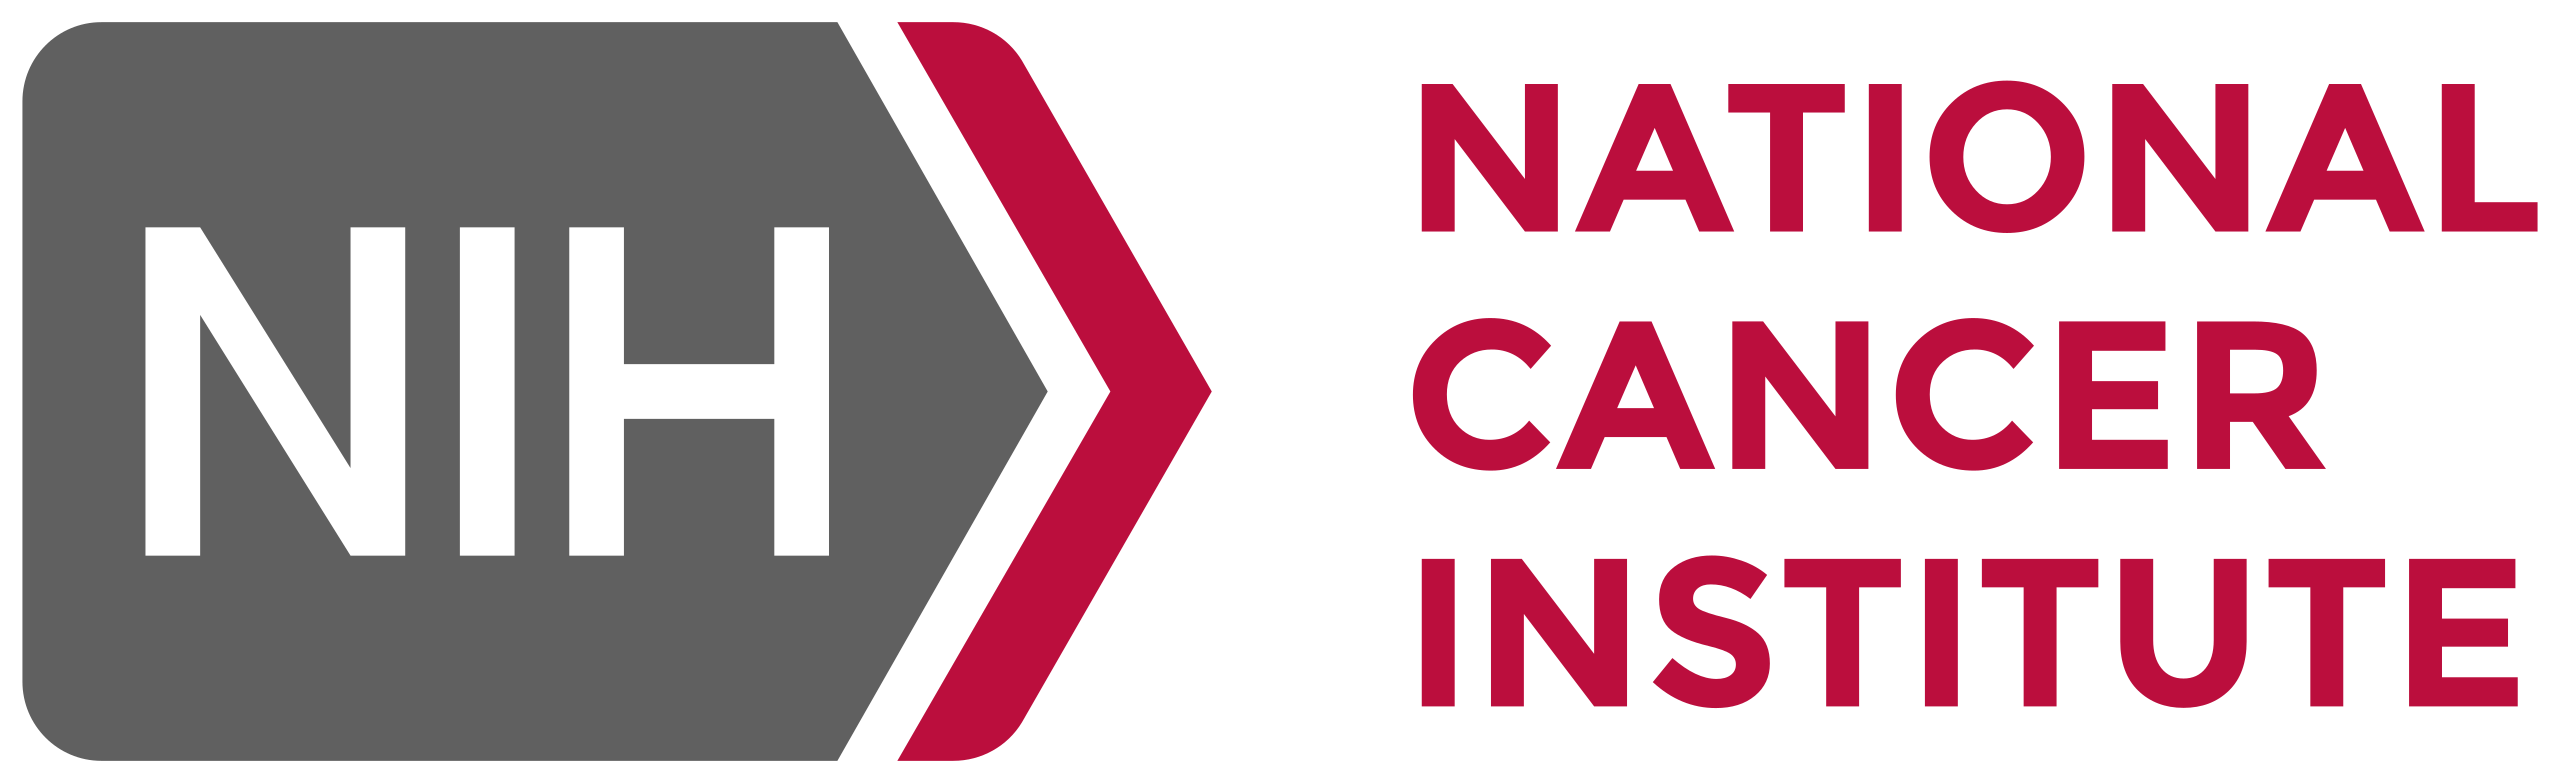 National Cancer Institute (NCI)